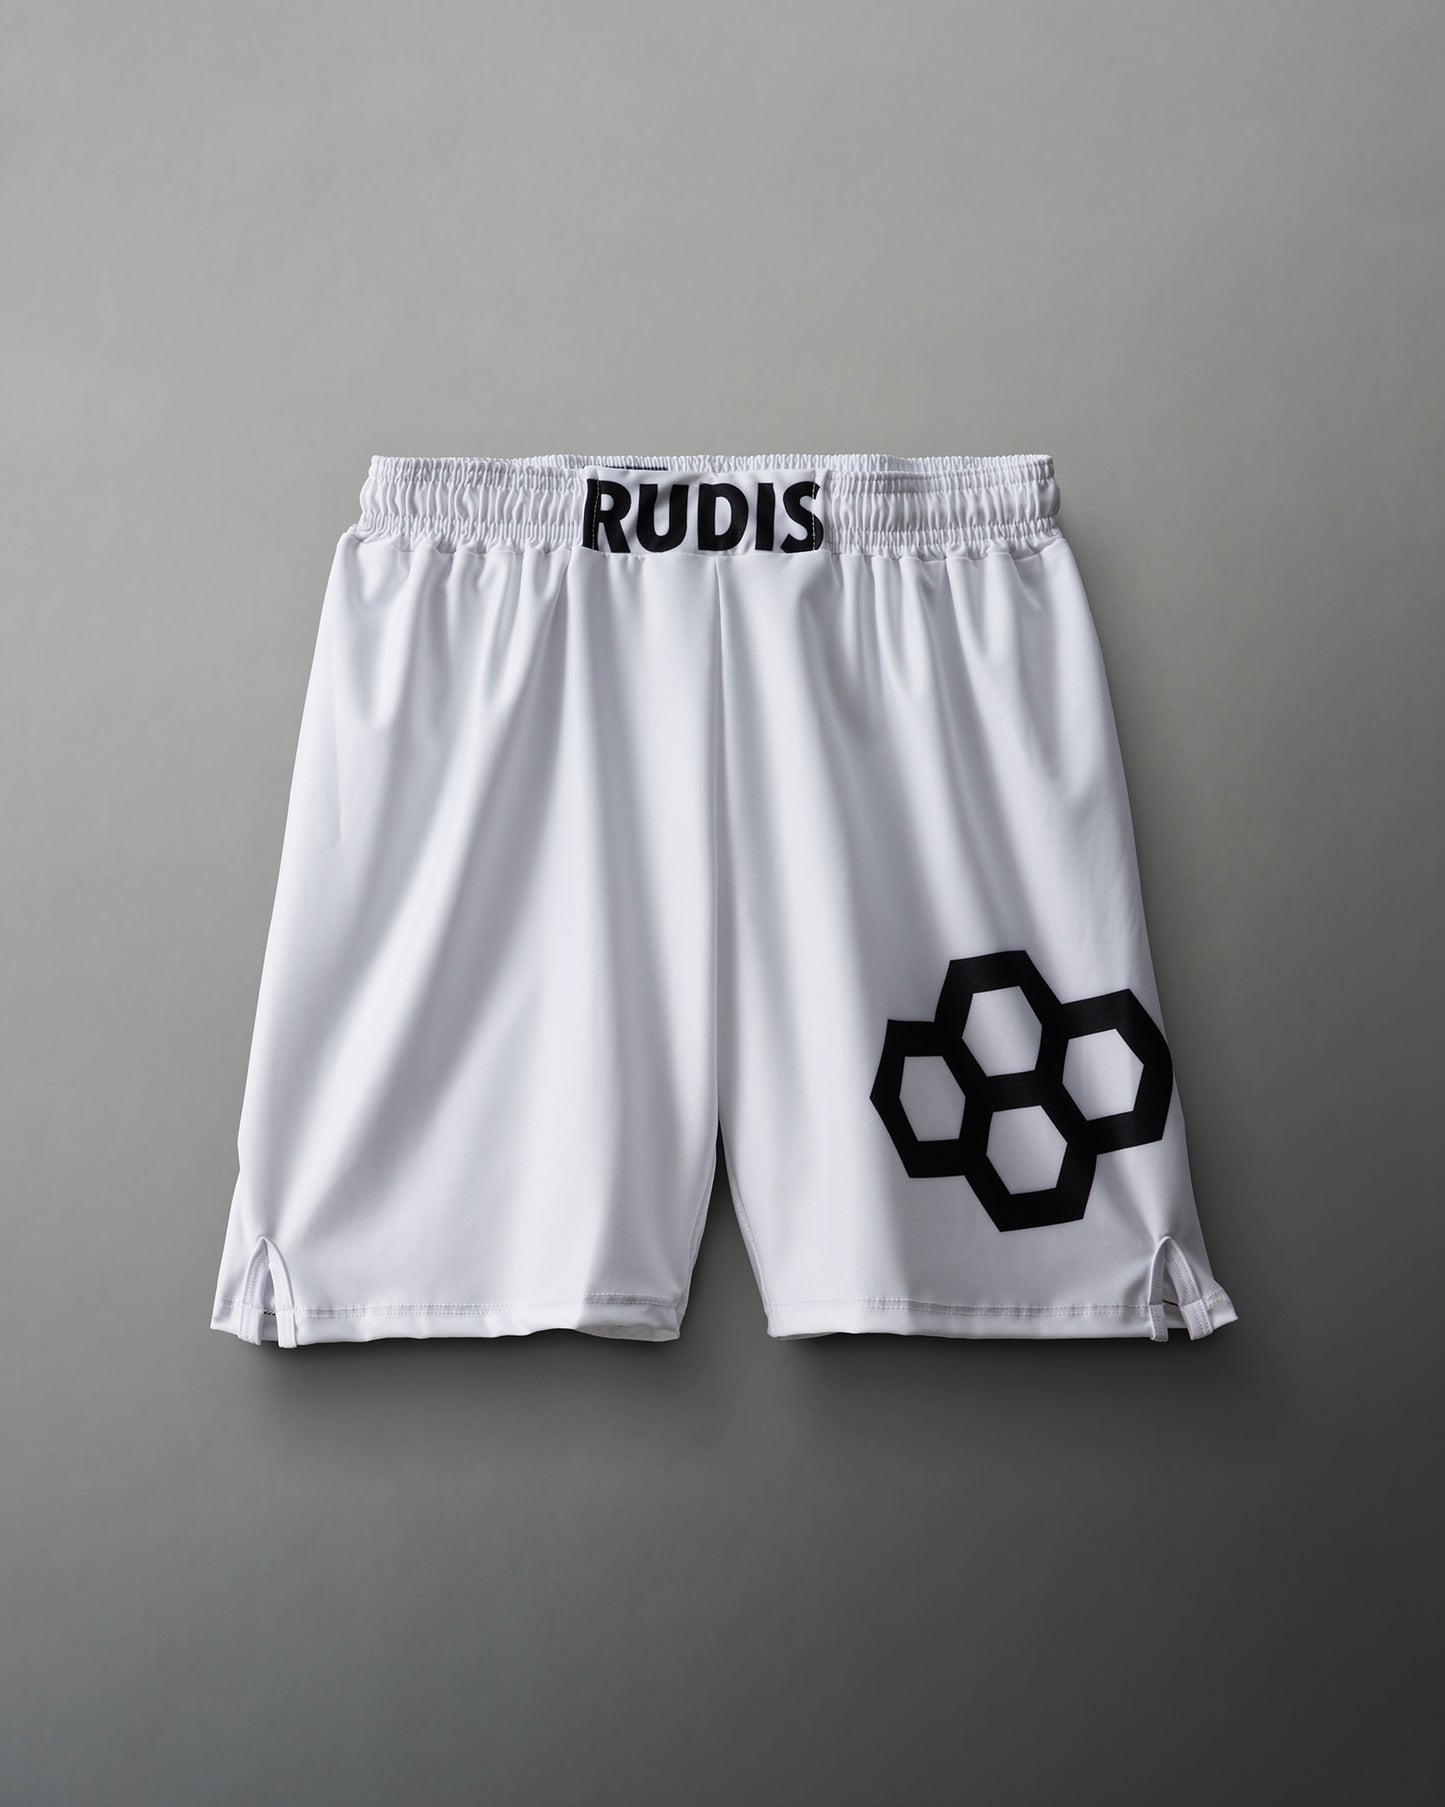 RUDIS Throwdown Elite Wrestling Shorts